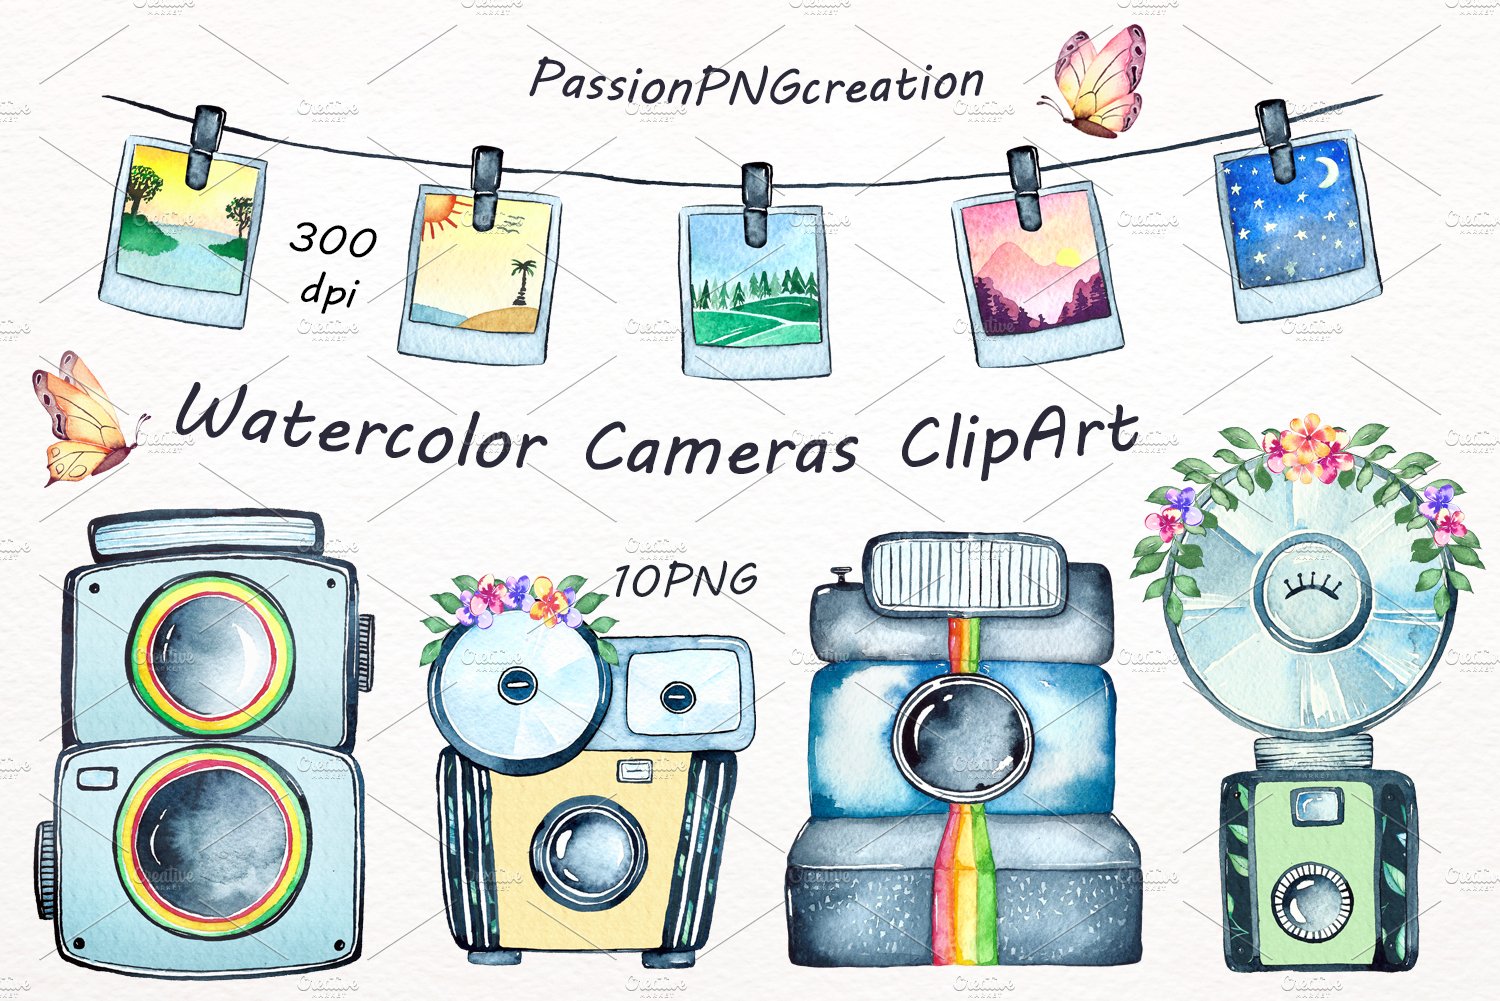 Watercolor Cameras Clipart cover image.